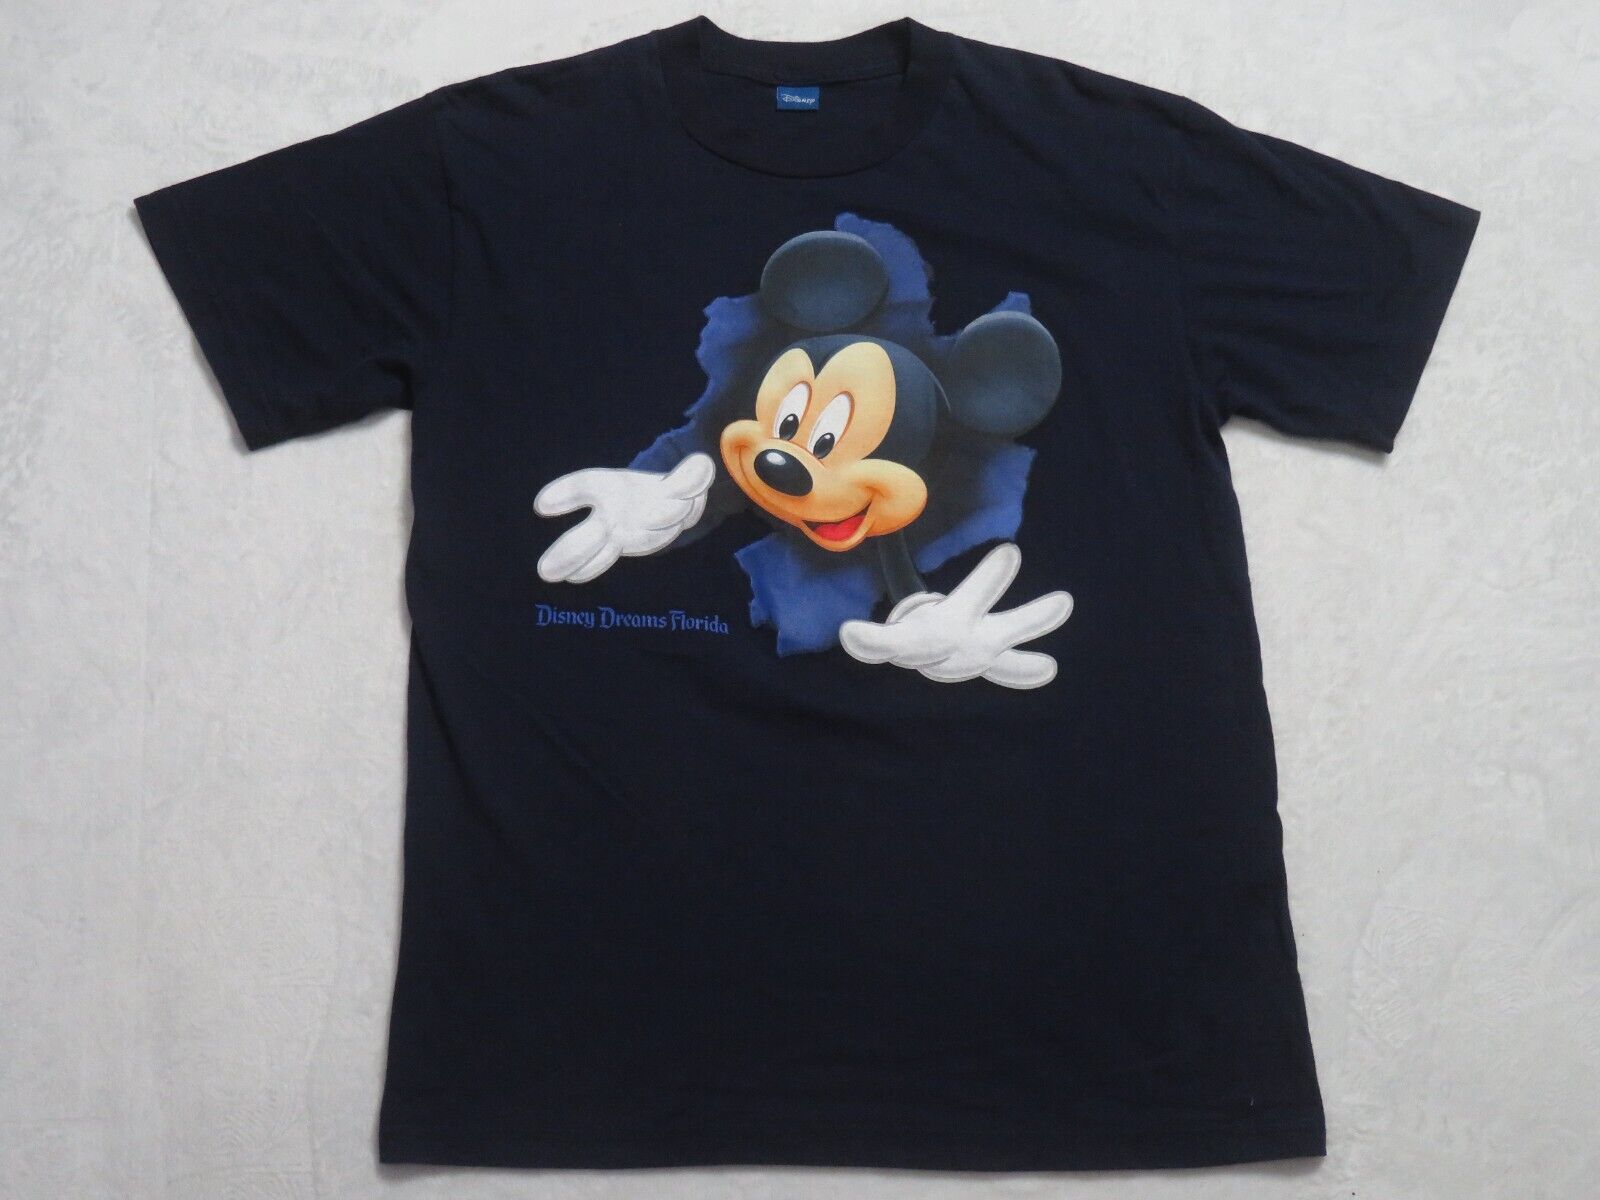 Vintage Disney Dream Florida Mickey Mouse Shirt Size Large Medium Double Sided